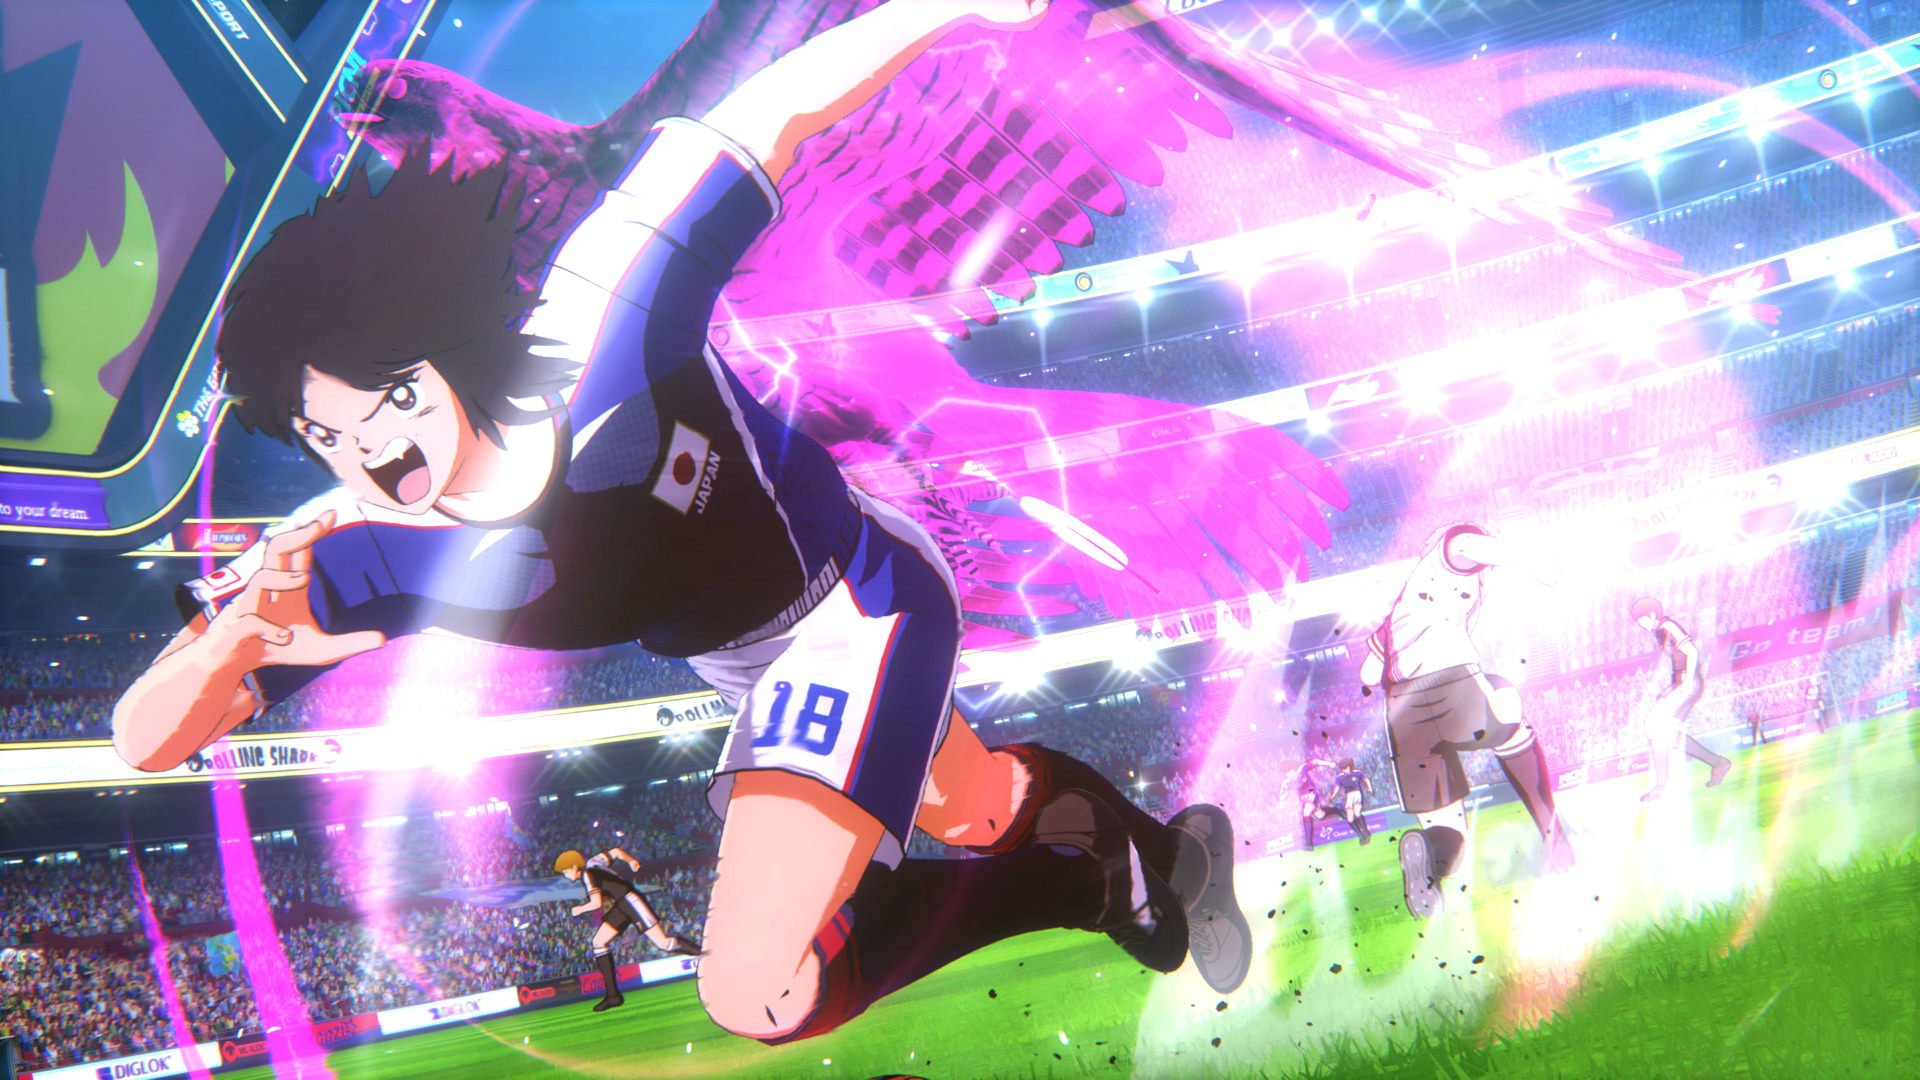 994380 descargar imagen captain tsubasa: rise of new champions, videojuego: fondos de pantalla y protectores de pantalla gratis